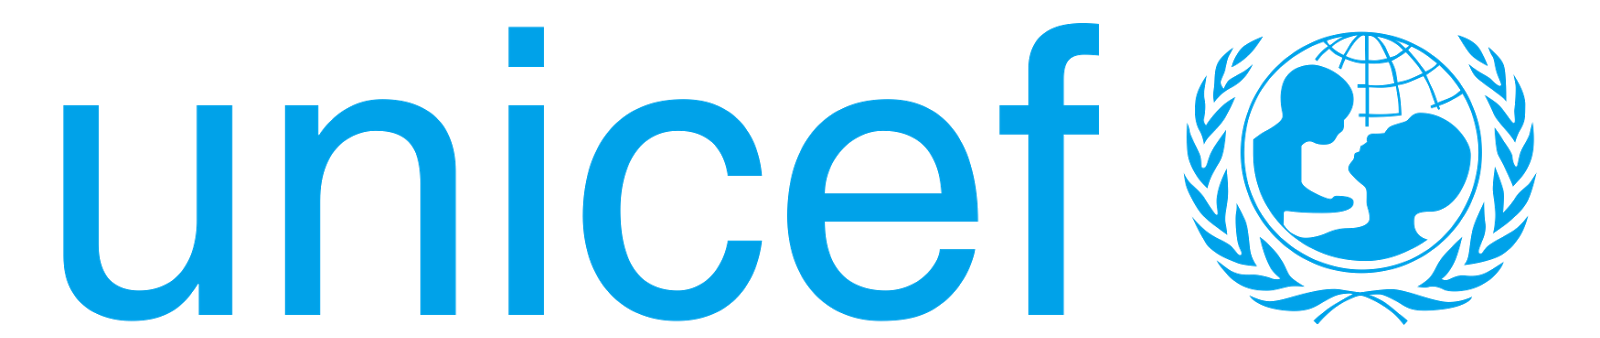 Unicef-logo-vector.png